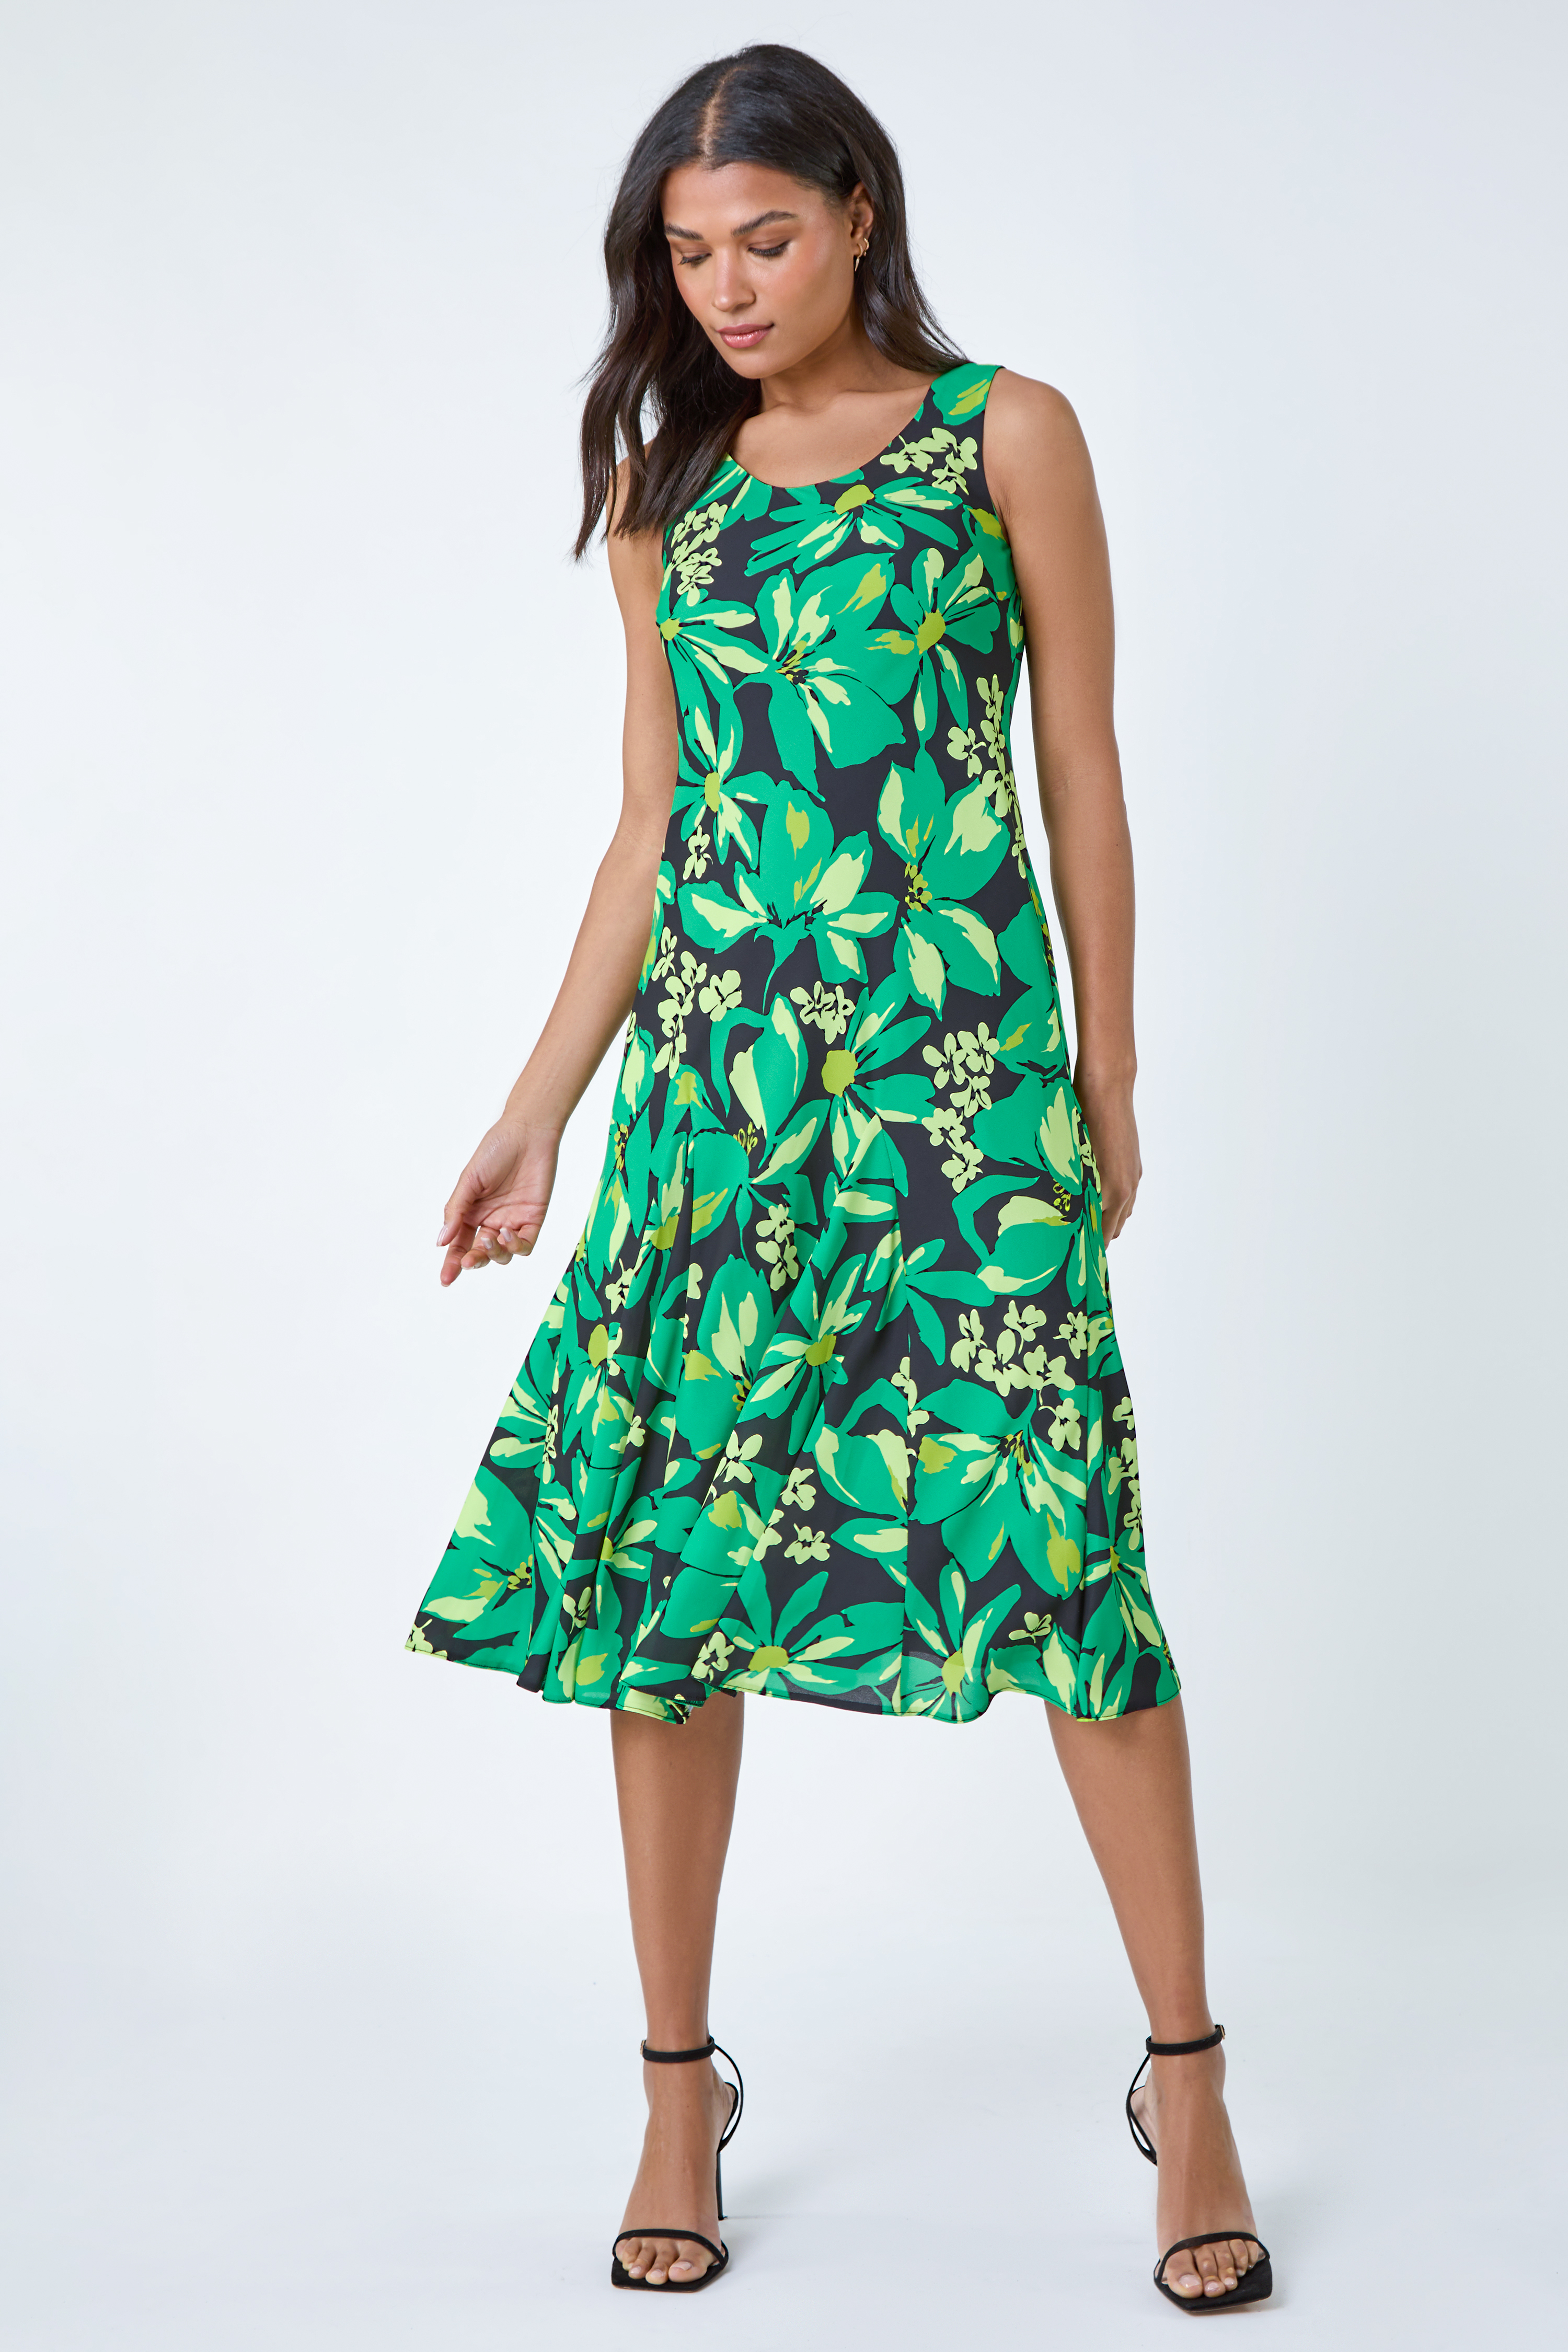 Green Floral Bias Cut Stretch Dress, Image 2 of 5